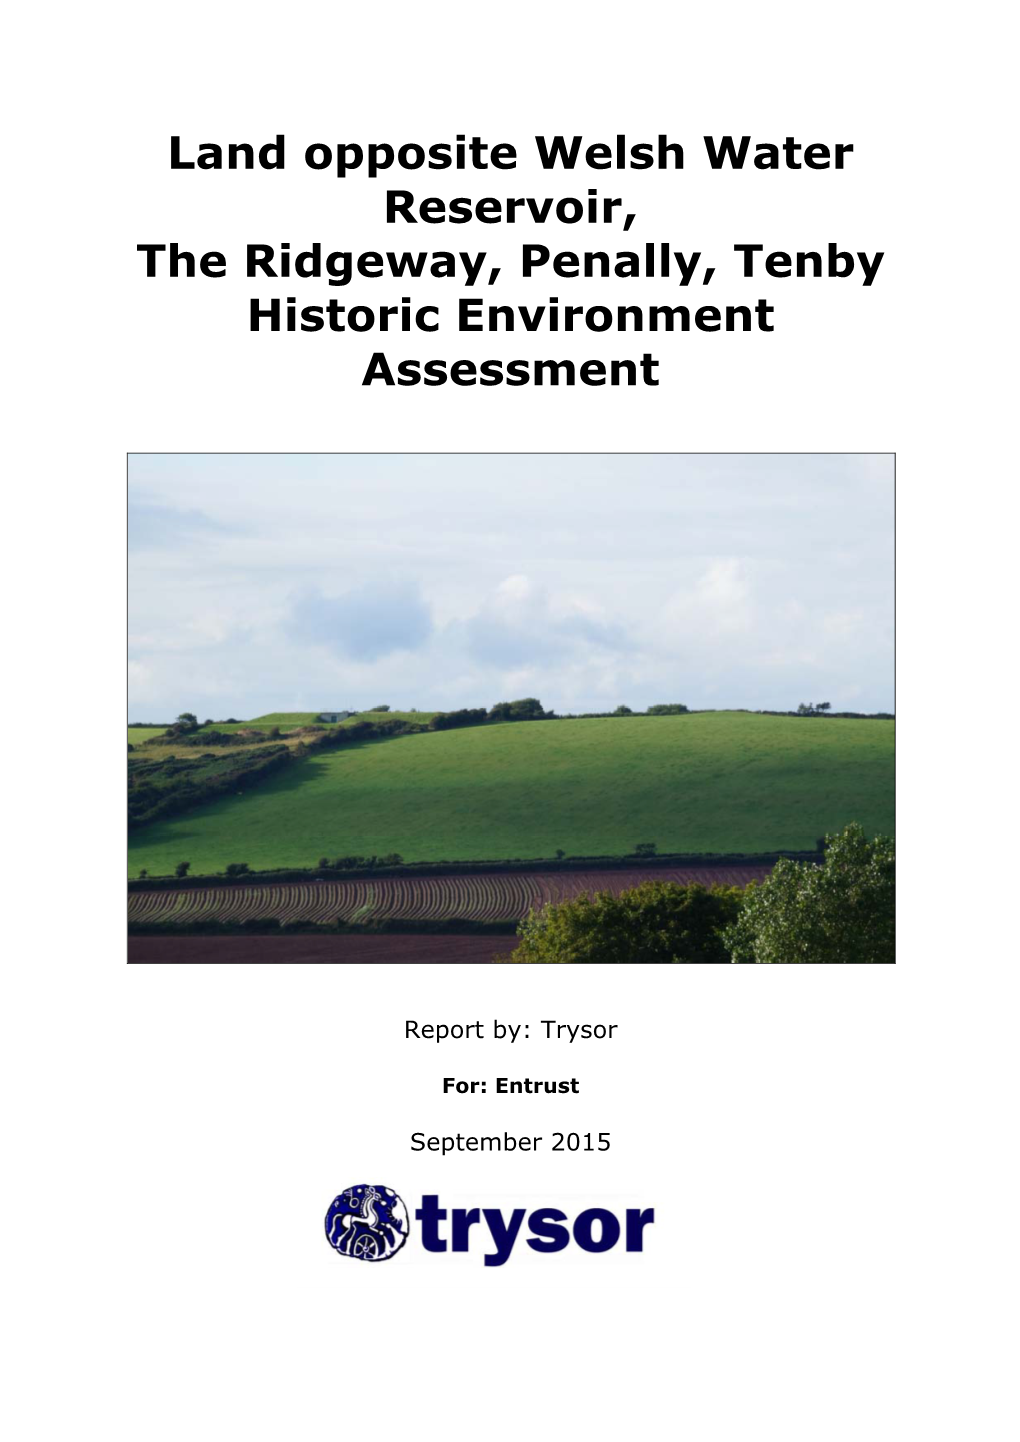 Land Opposite Welsh Water Reservoir, the Ridgeway, Penally, Tenby Historic Environment Assessment